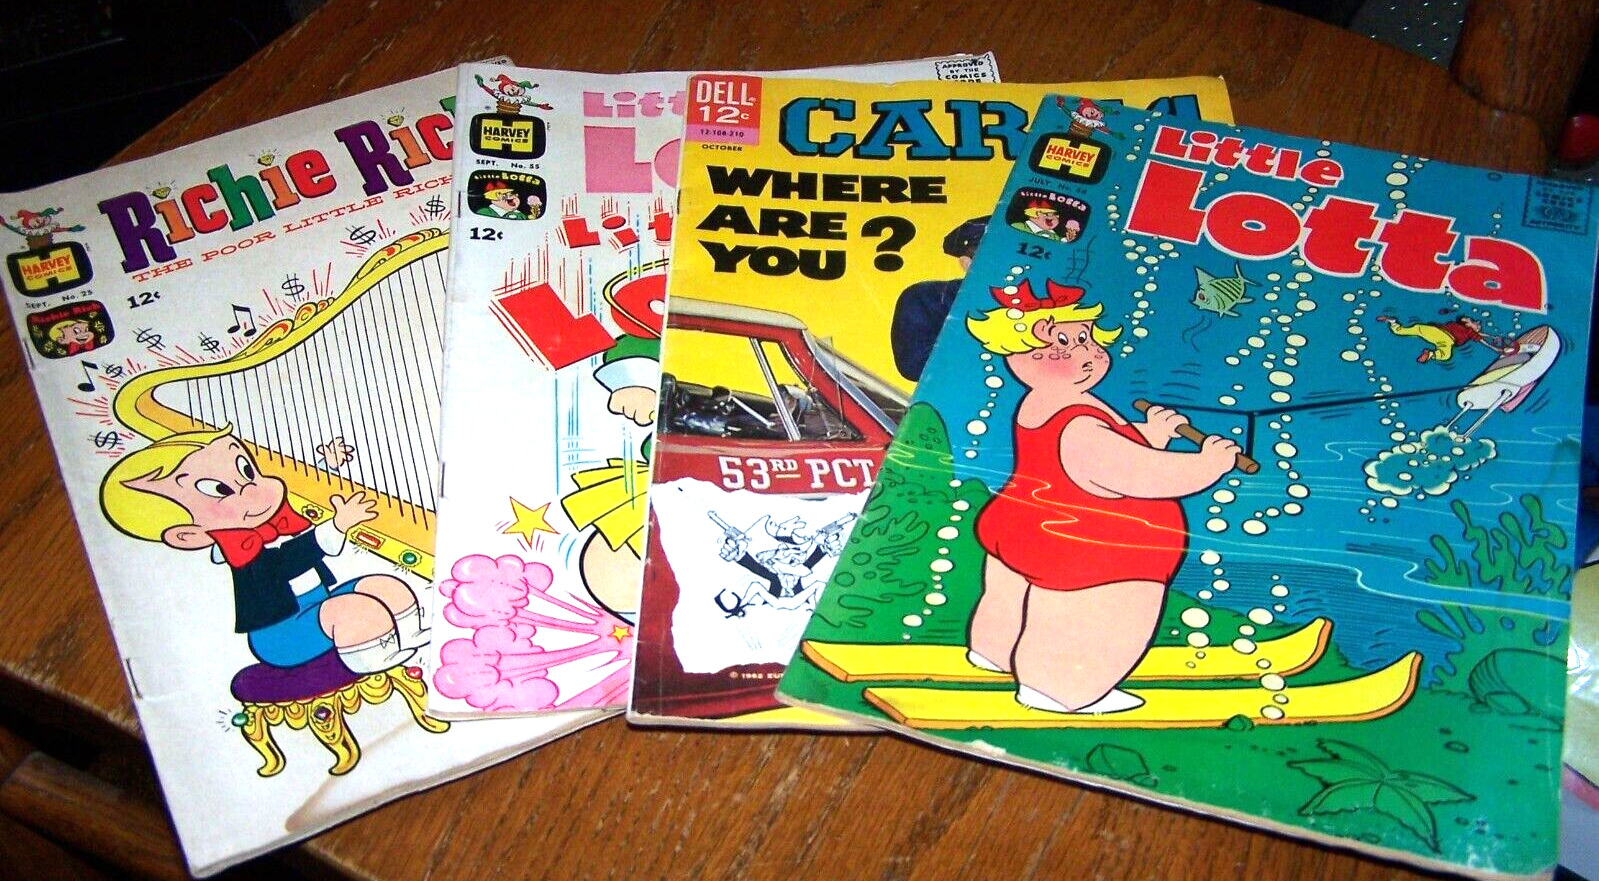 Lot 4 Vintage Ungraded Comics. Little Lotta, Richie Rich, Car 54 Where are You?